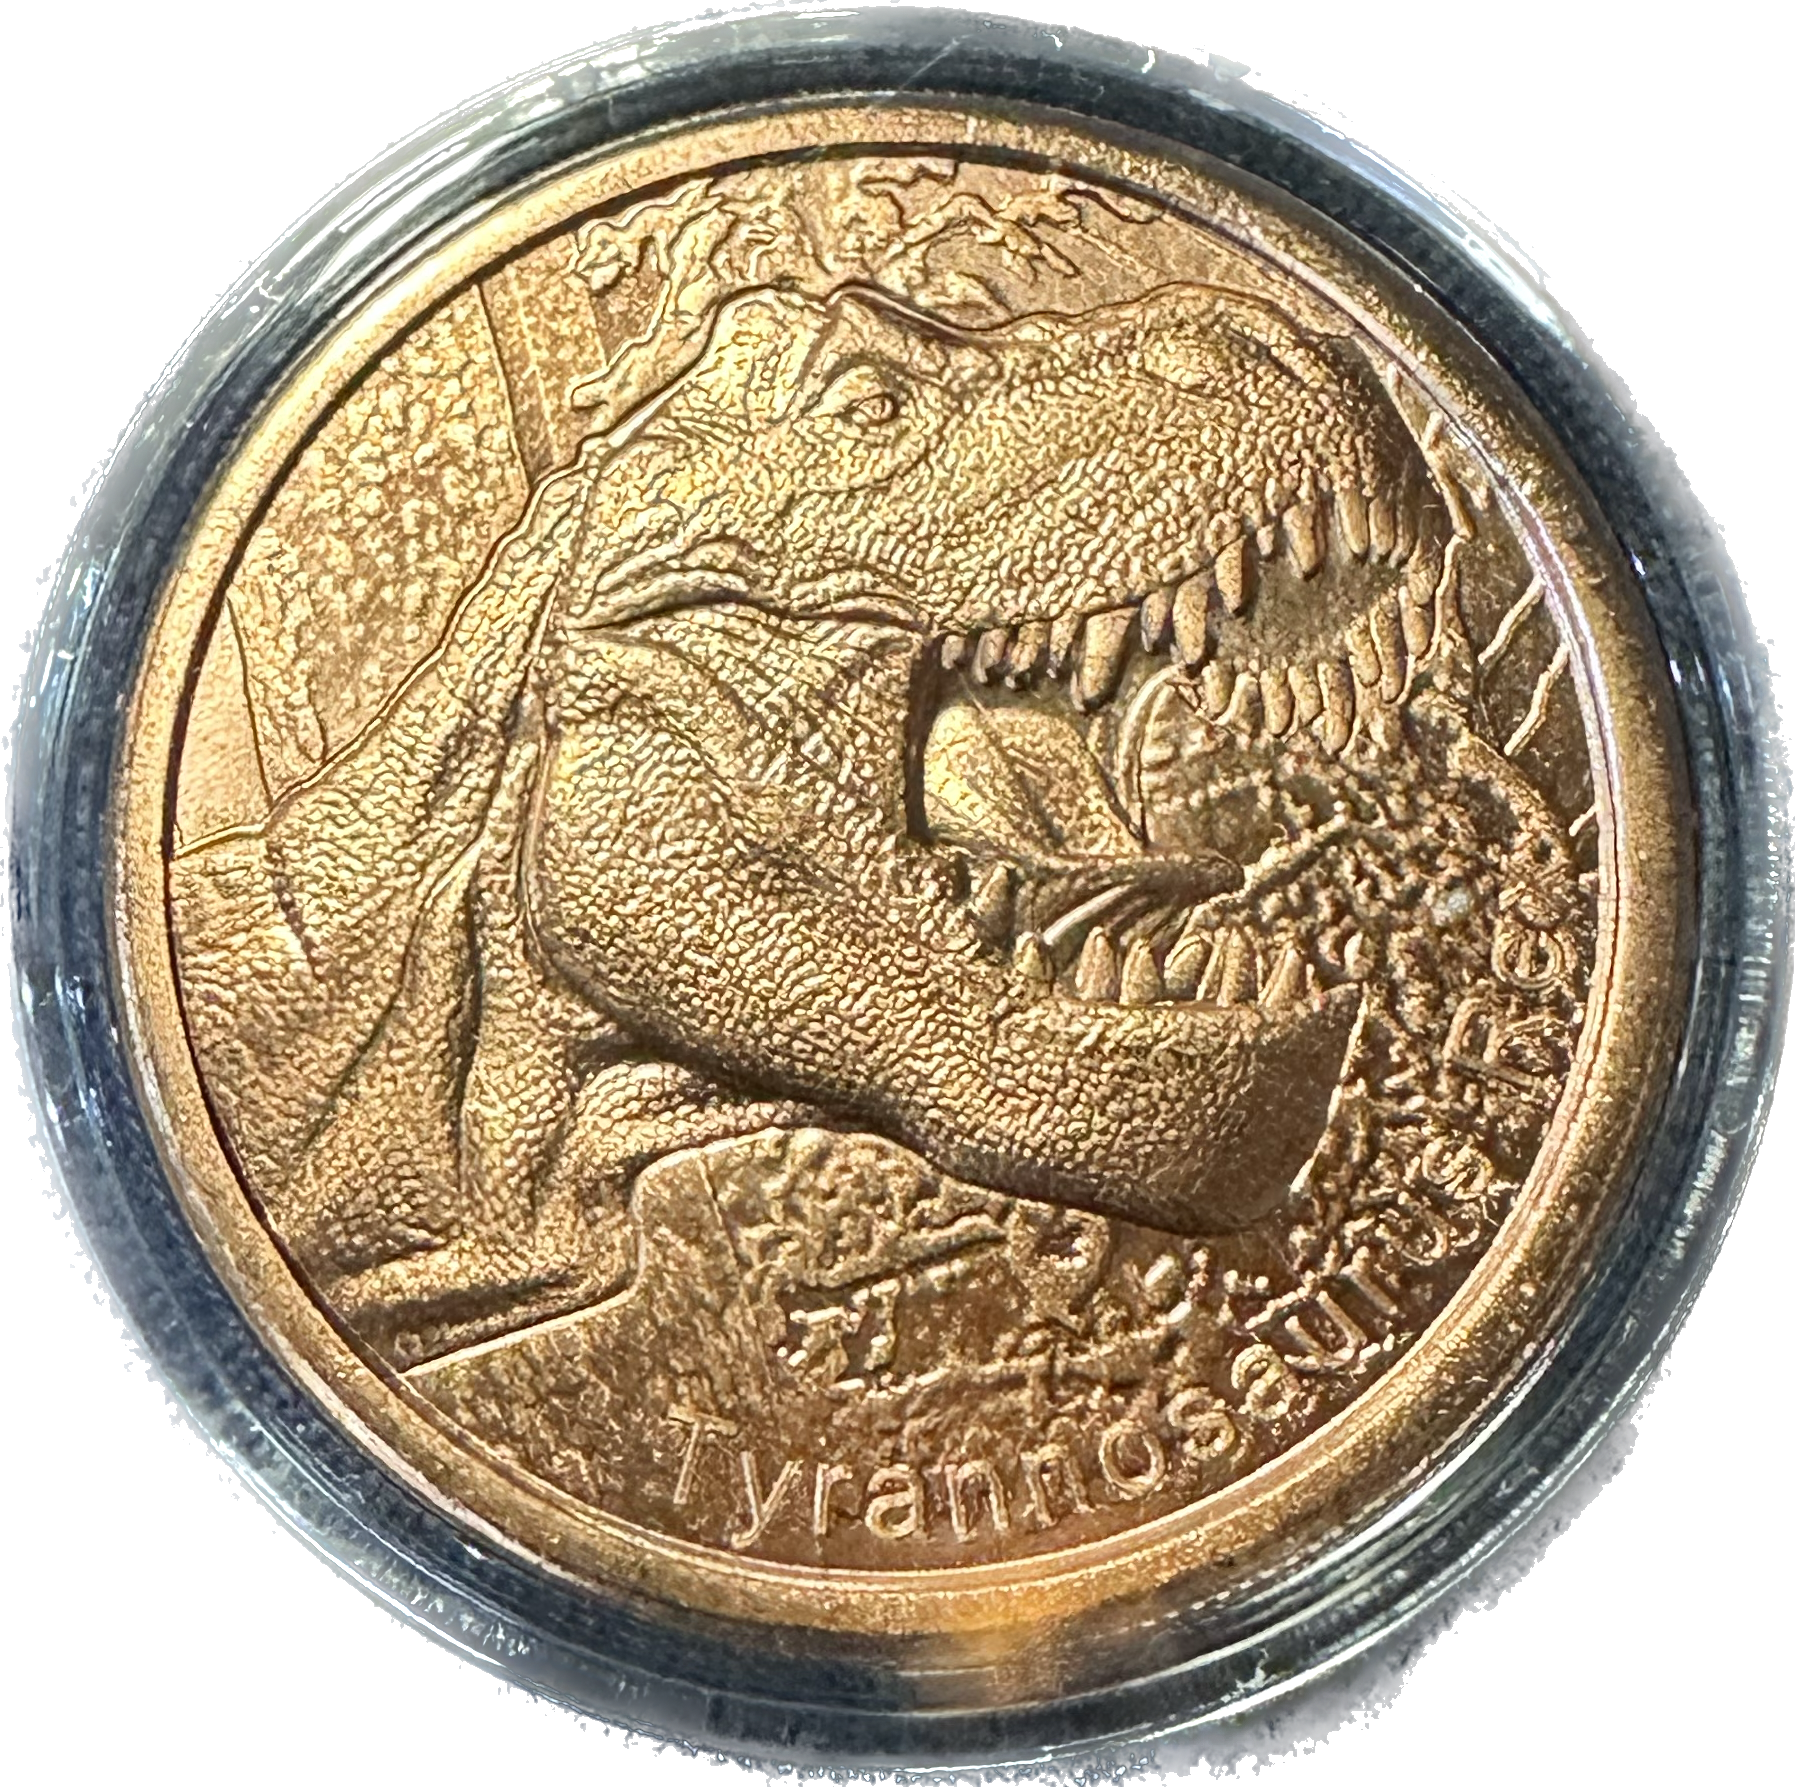 Trex copper coin, 1oz Prehistoric Online